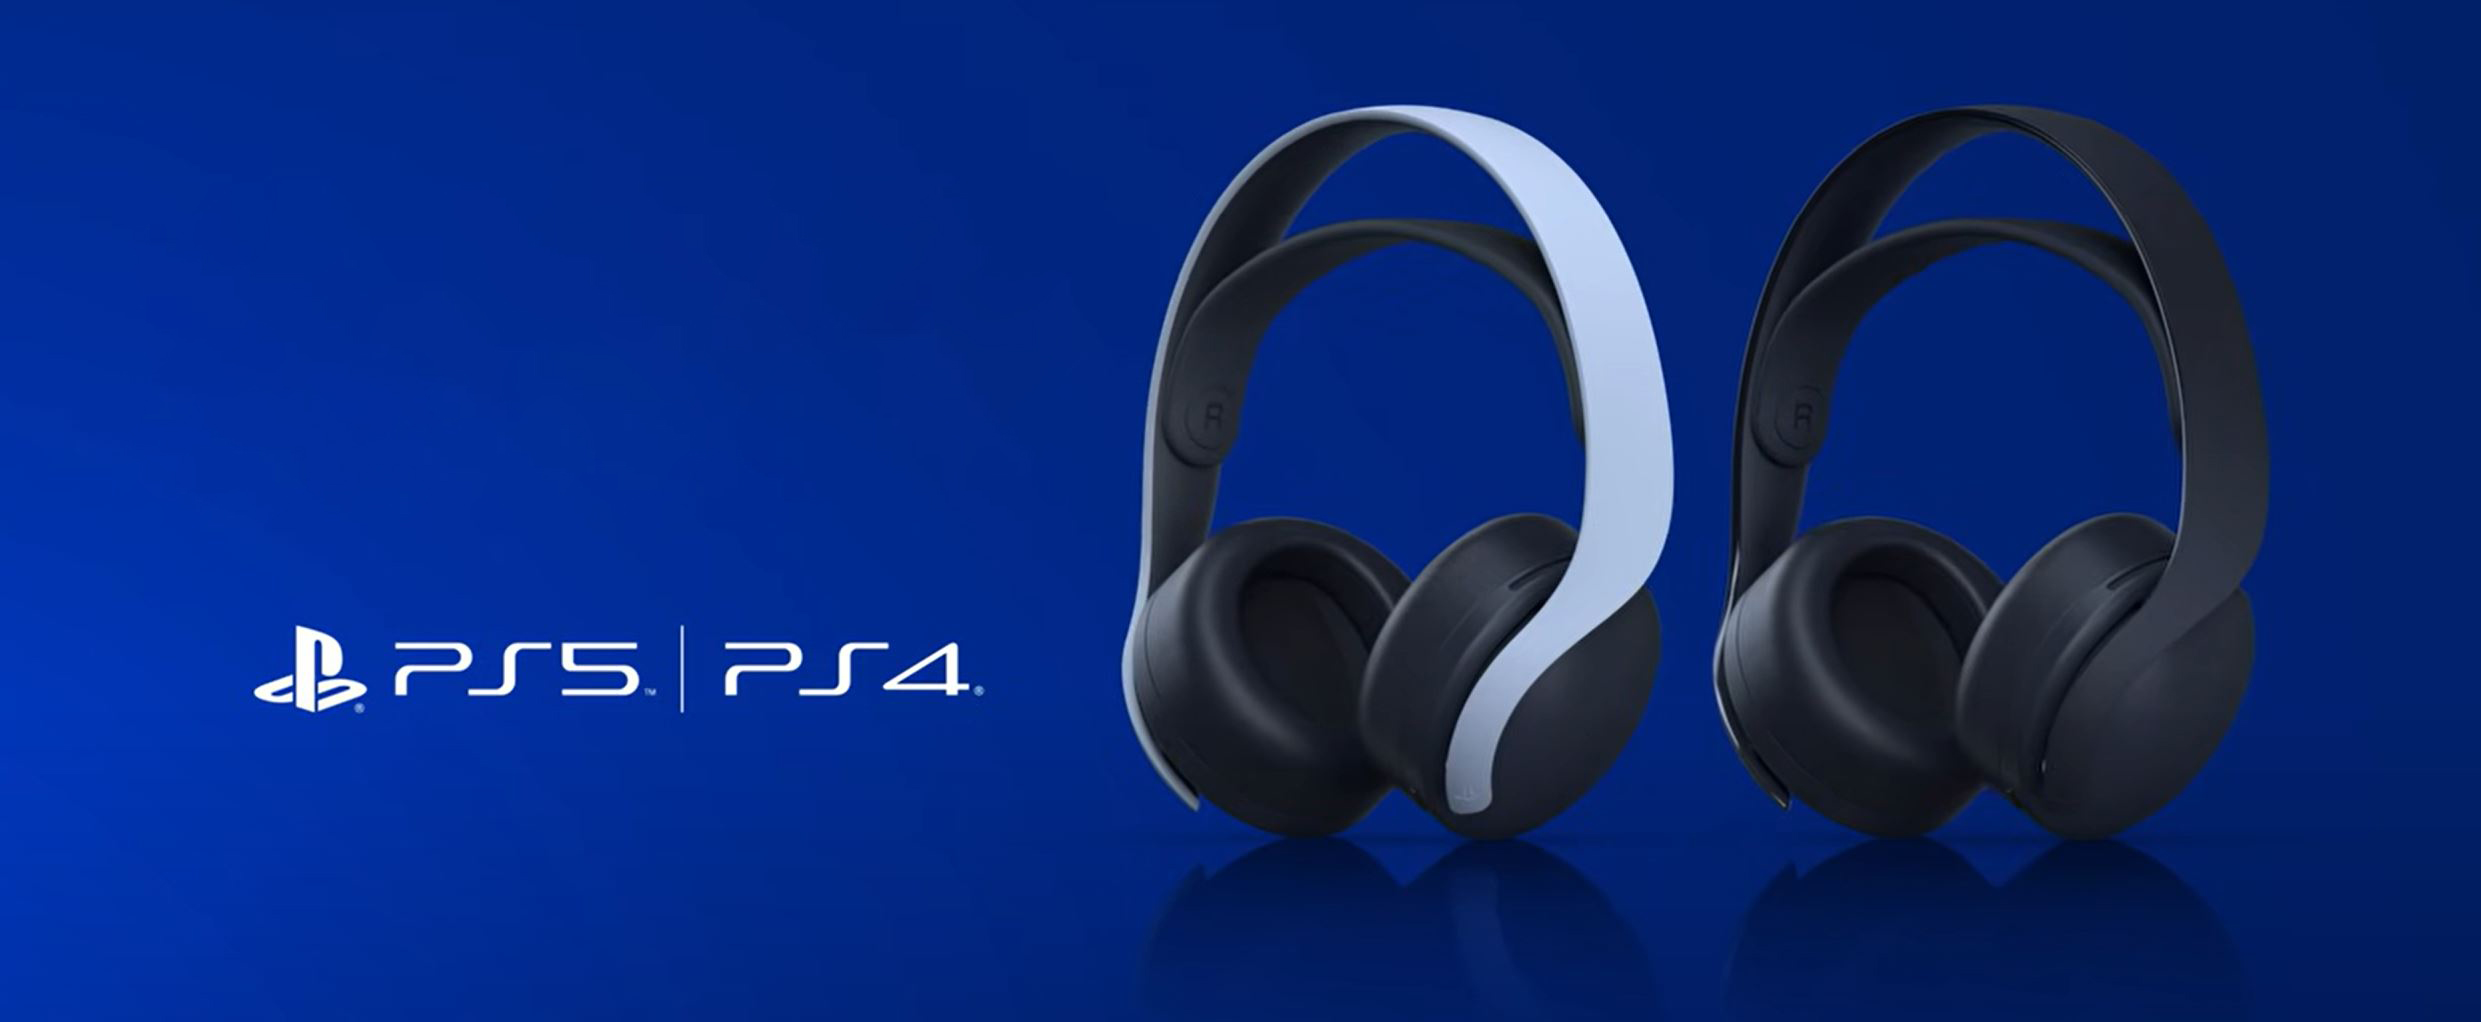 PlayStation PULSE 3D Wireless Headset